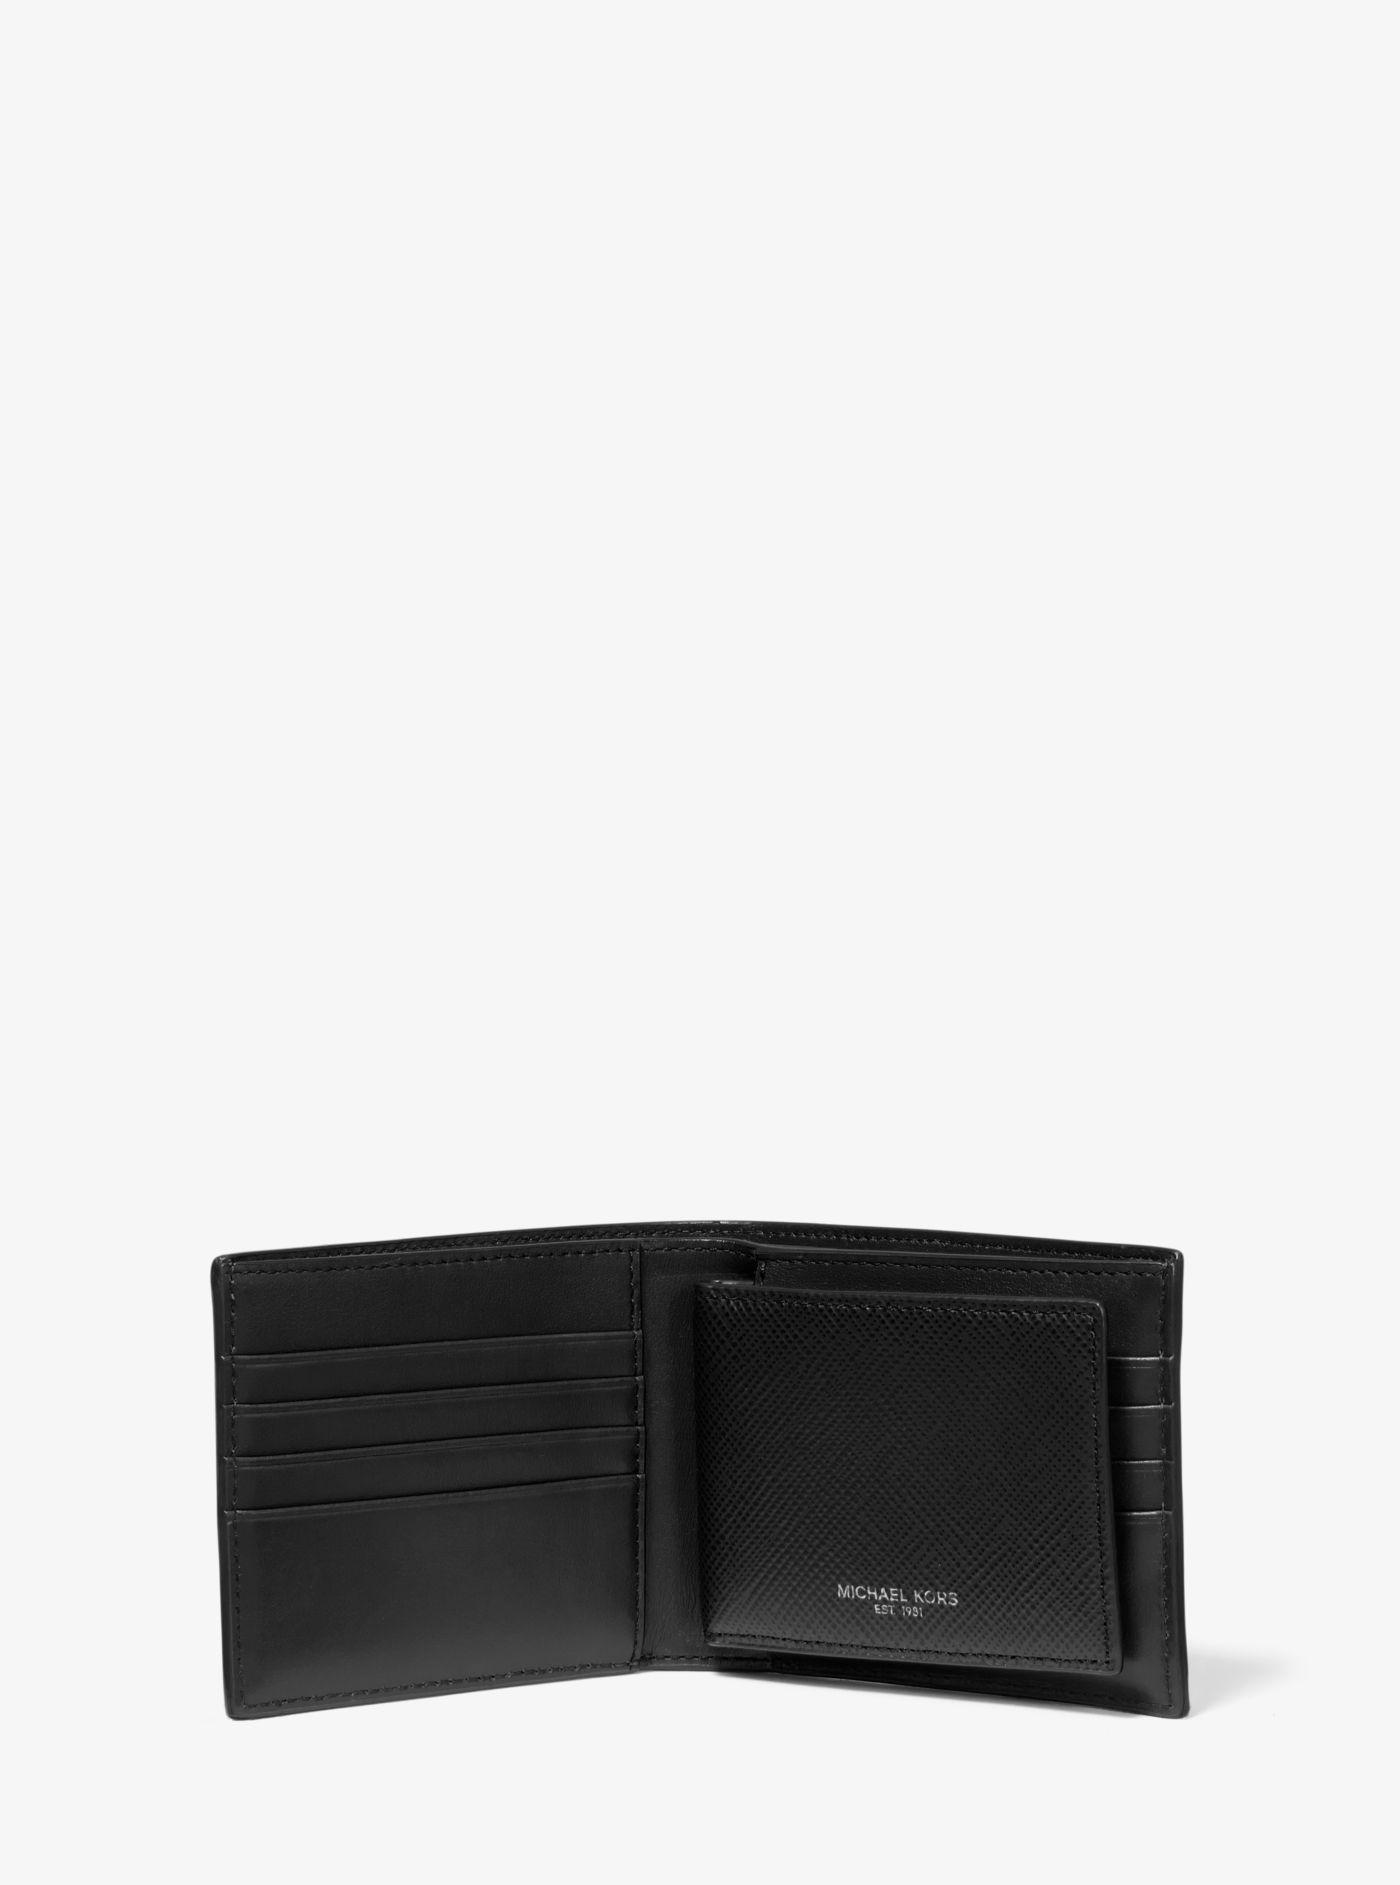 michael kors purse wallet